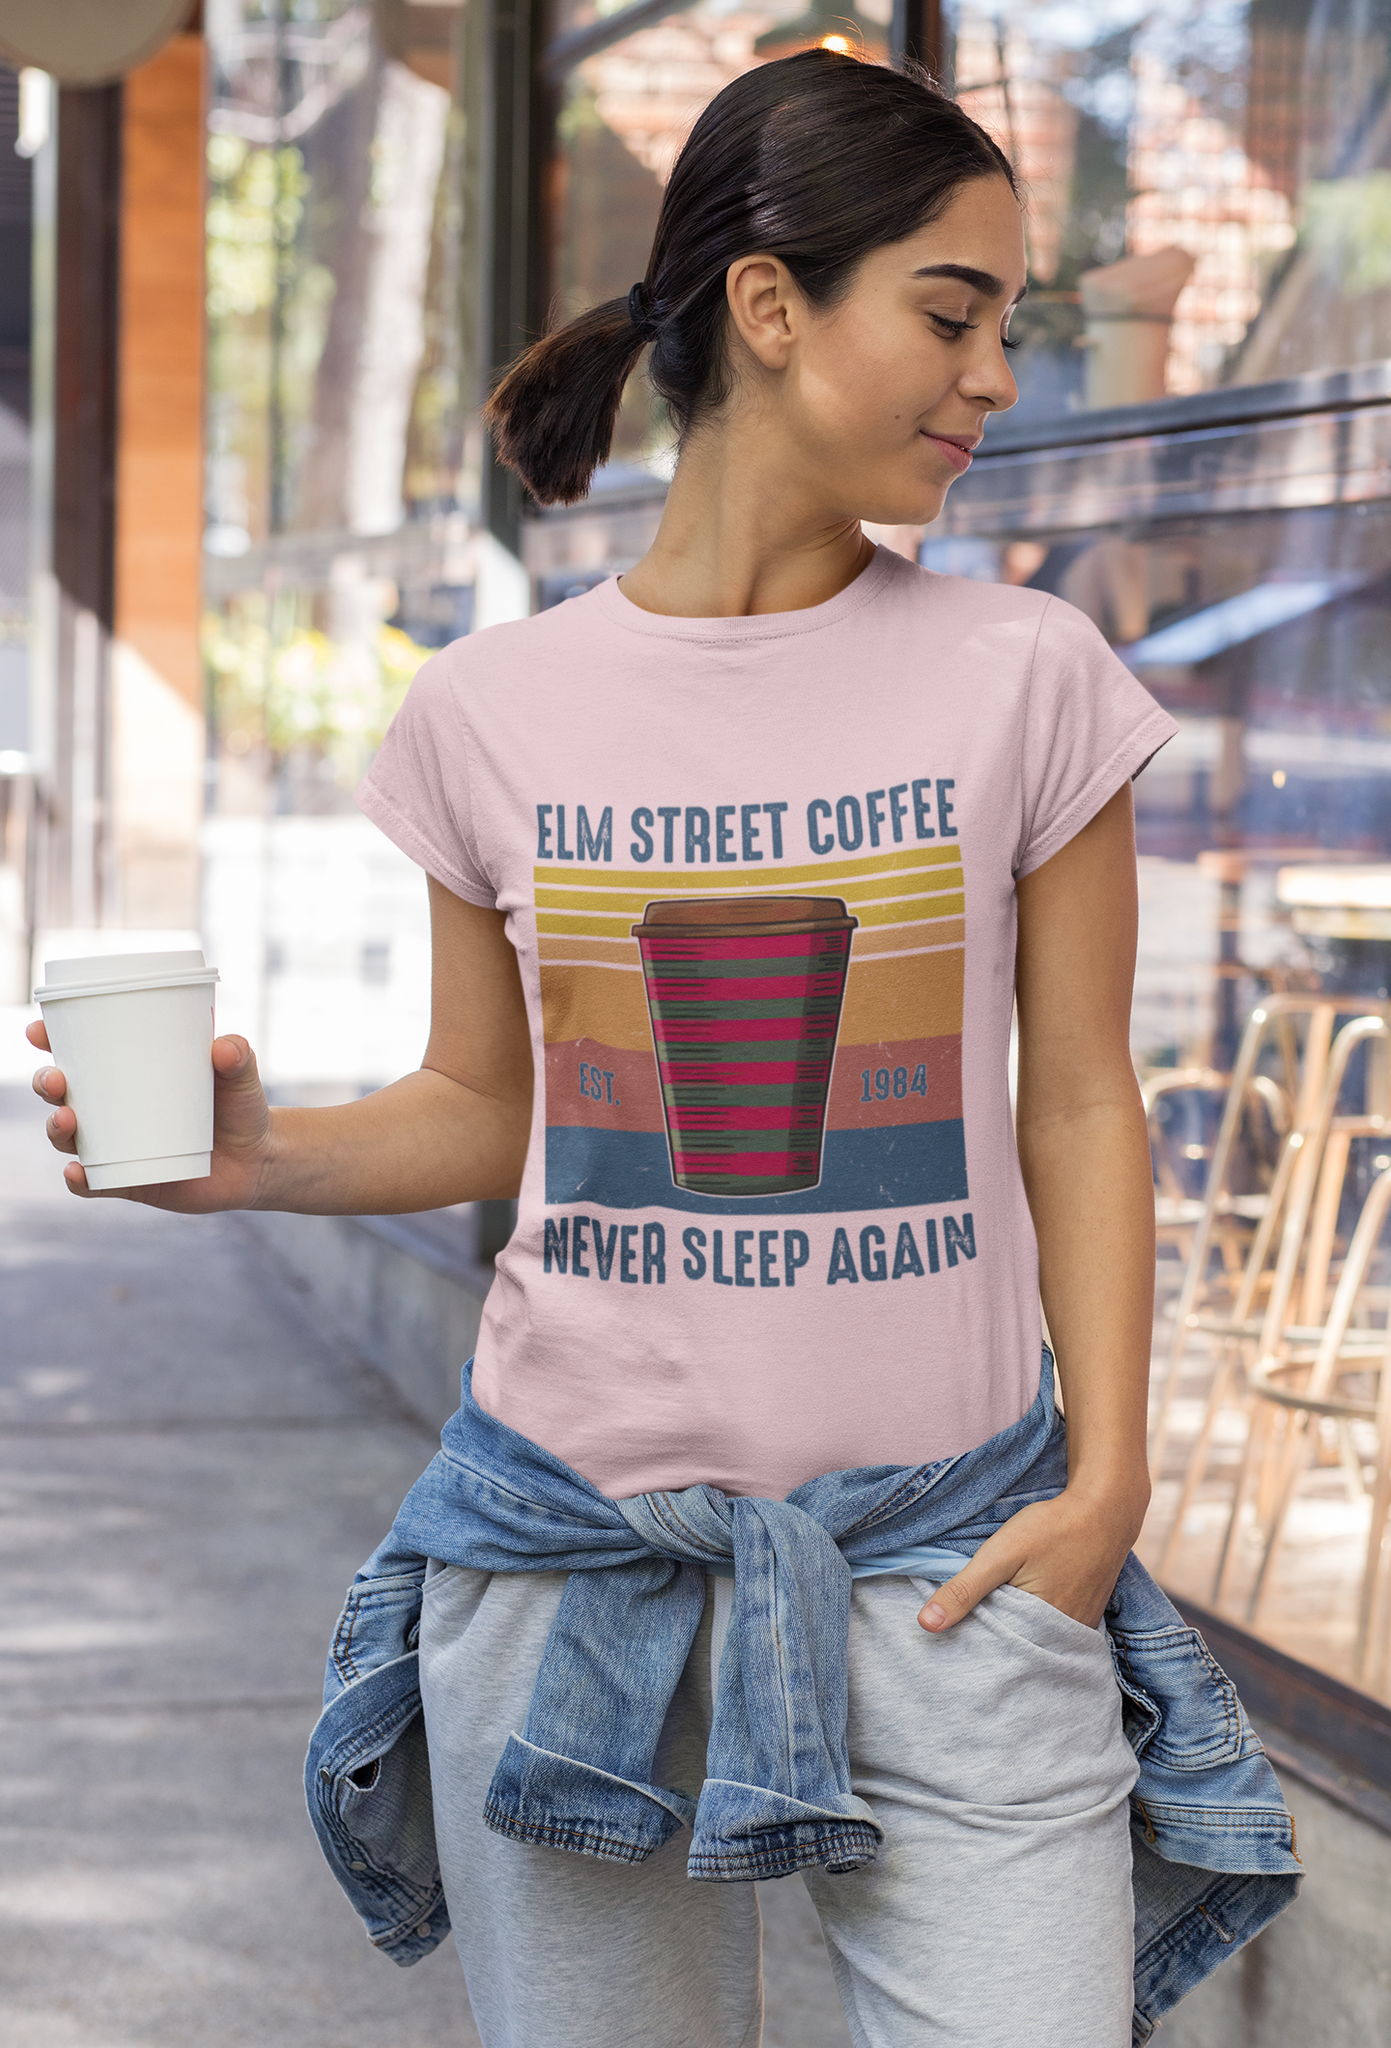 Nightmare On Elm Street Vintage T Shirt, Never Sleep Again T Shirt, Elm Street Coffee Tshirt, Halloween Gifts